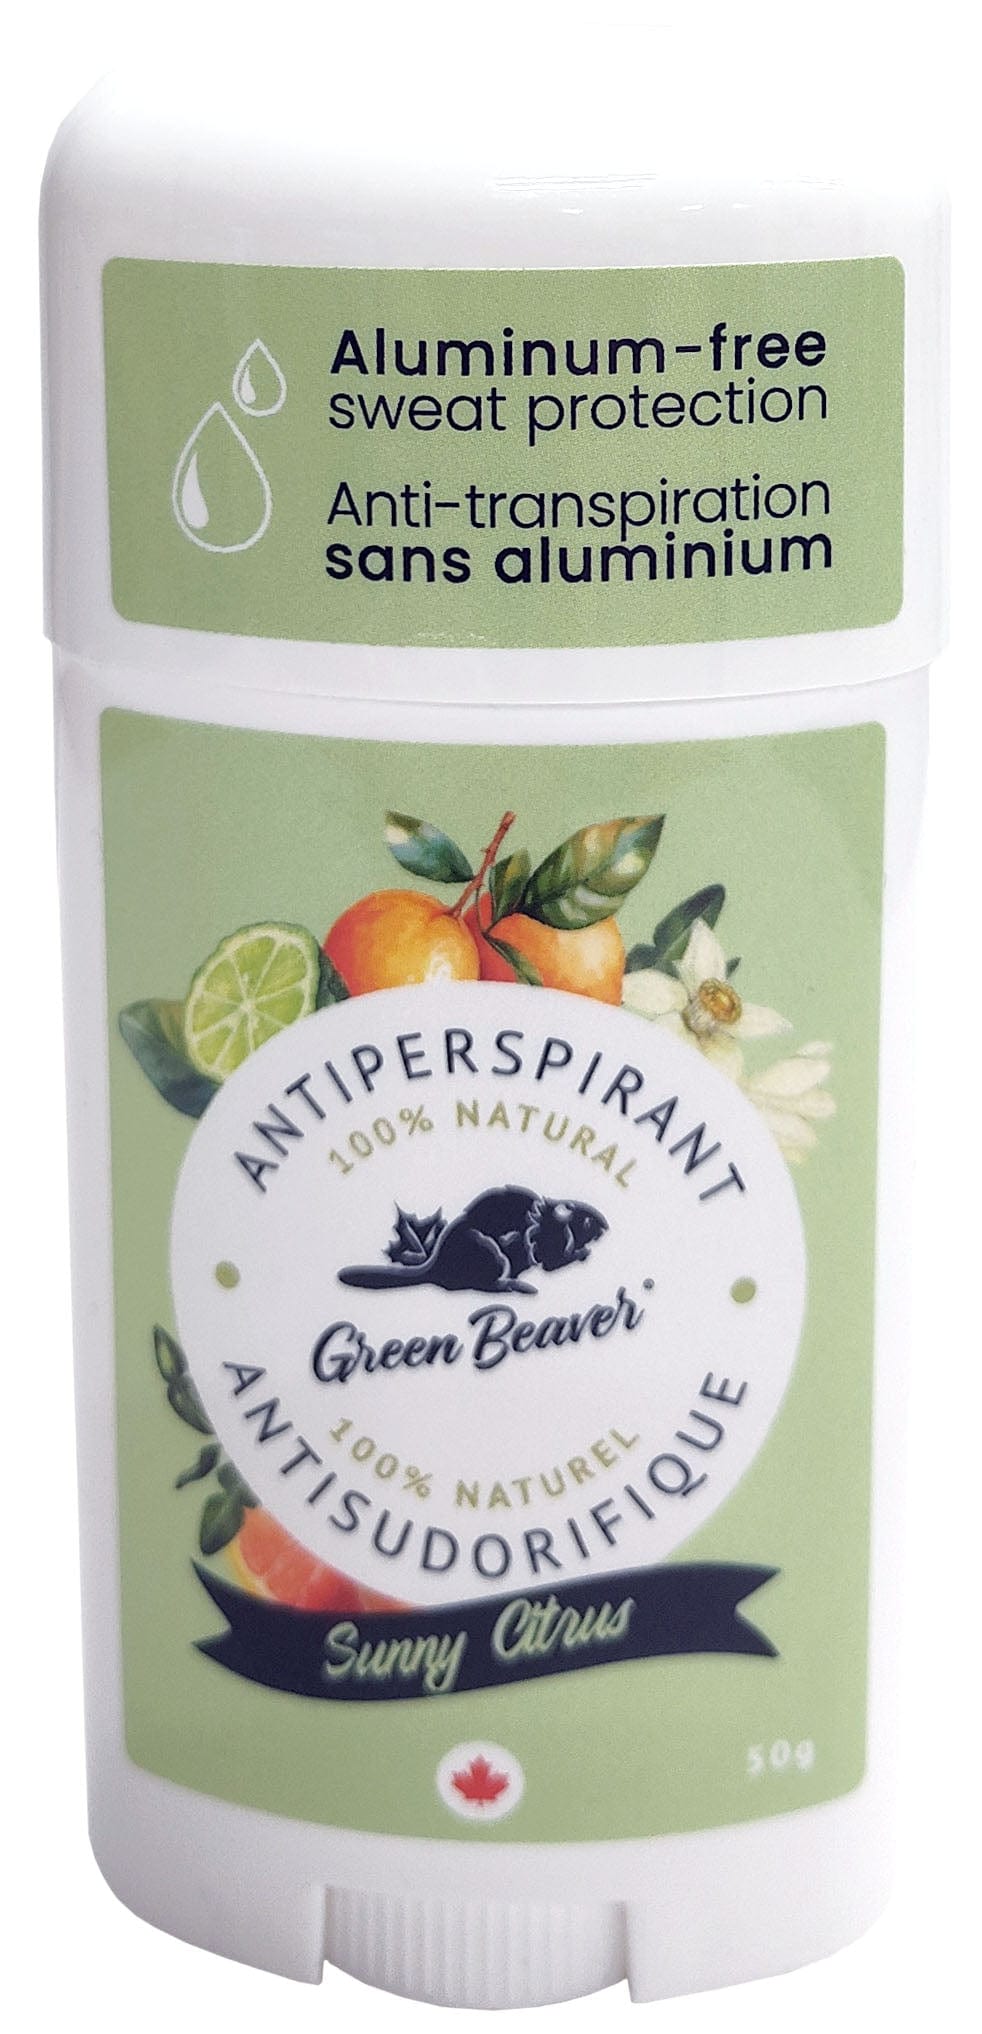 GREEN BEAVER Soins & beauté Antisudorifique Sunny citrus  50g